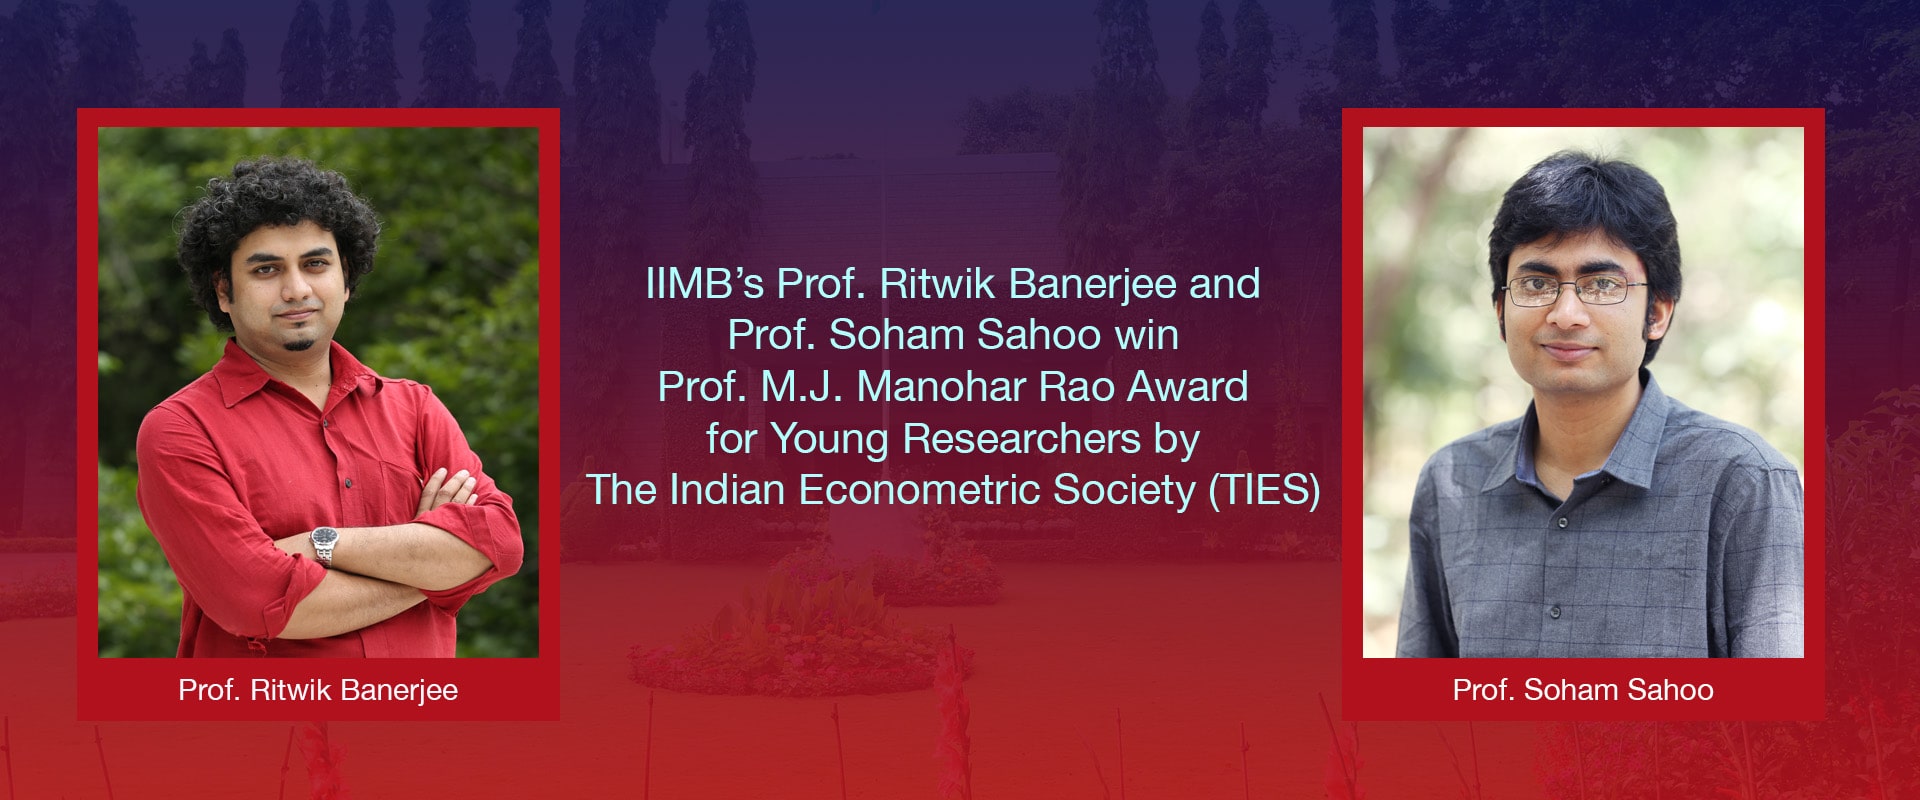 IIMB’s Prof. Ritwik Banerjee and Prof. Soham Sahoo win Prof. M.J. Manohar Rao Award for Young Researchers by The Indian Econometric Society (TIES)